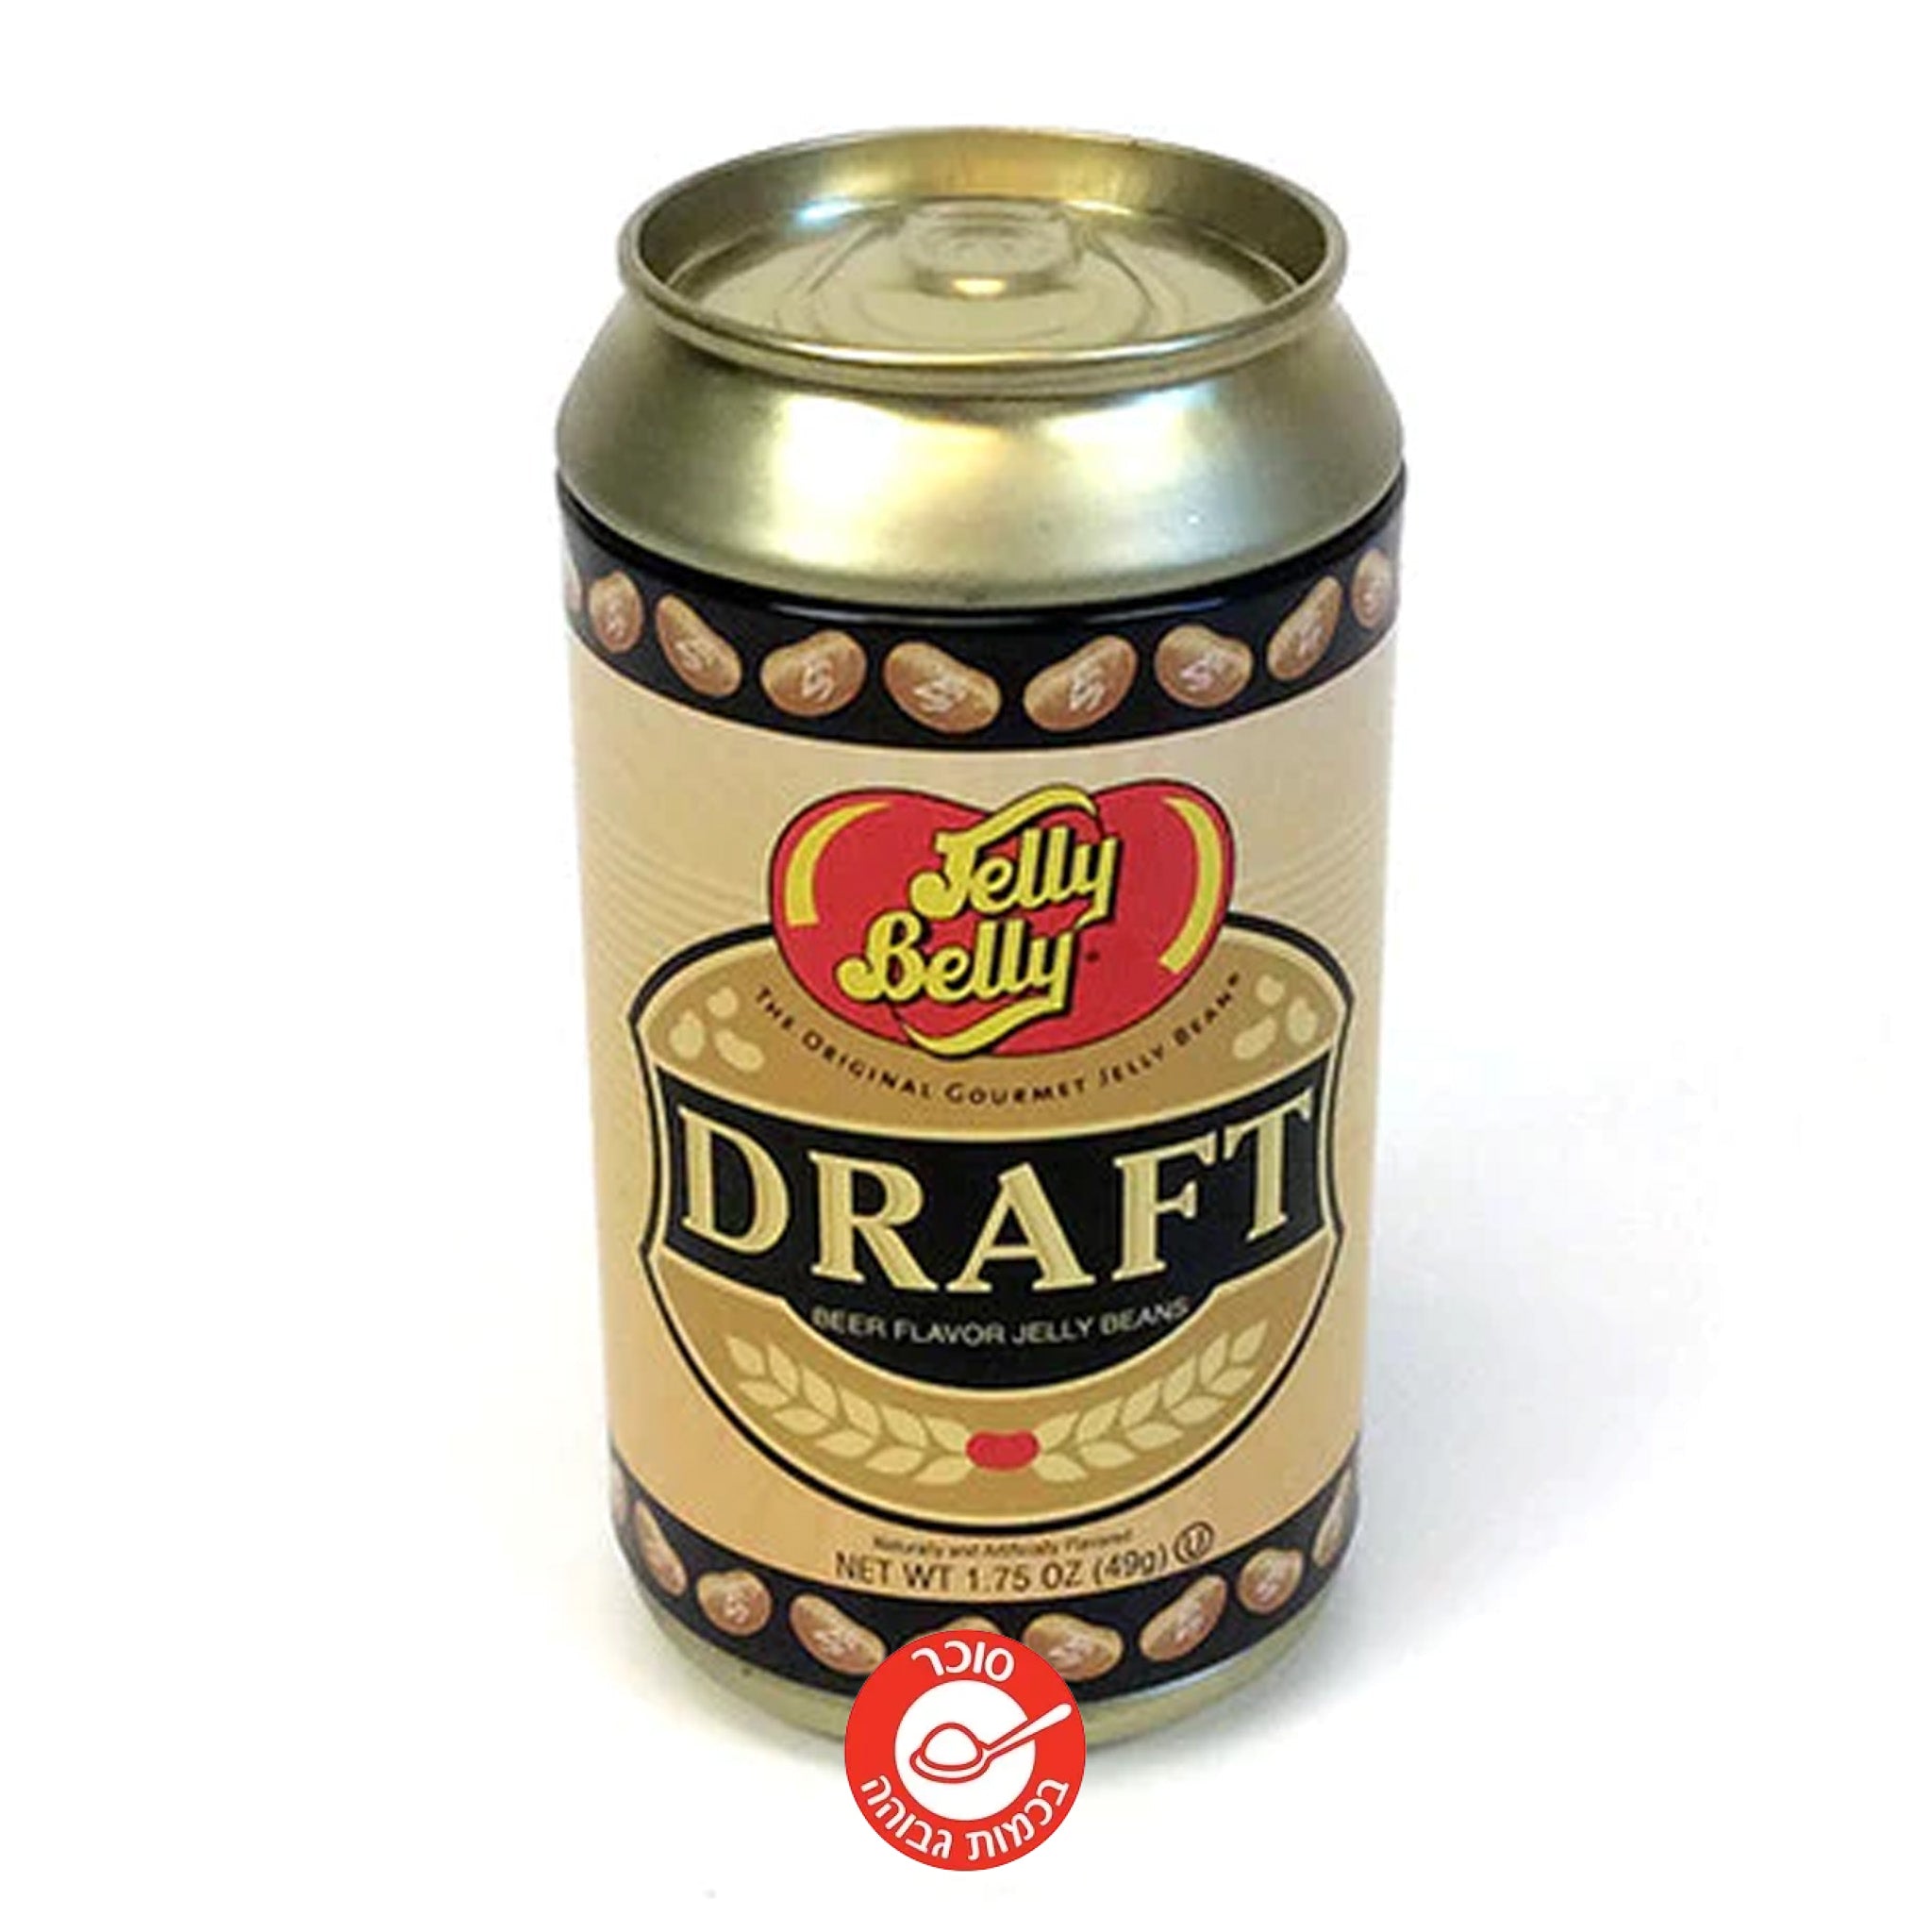 Jelly Belly Draft Beer Flavor סוכריות ג'לי בלי בפחית בירה